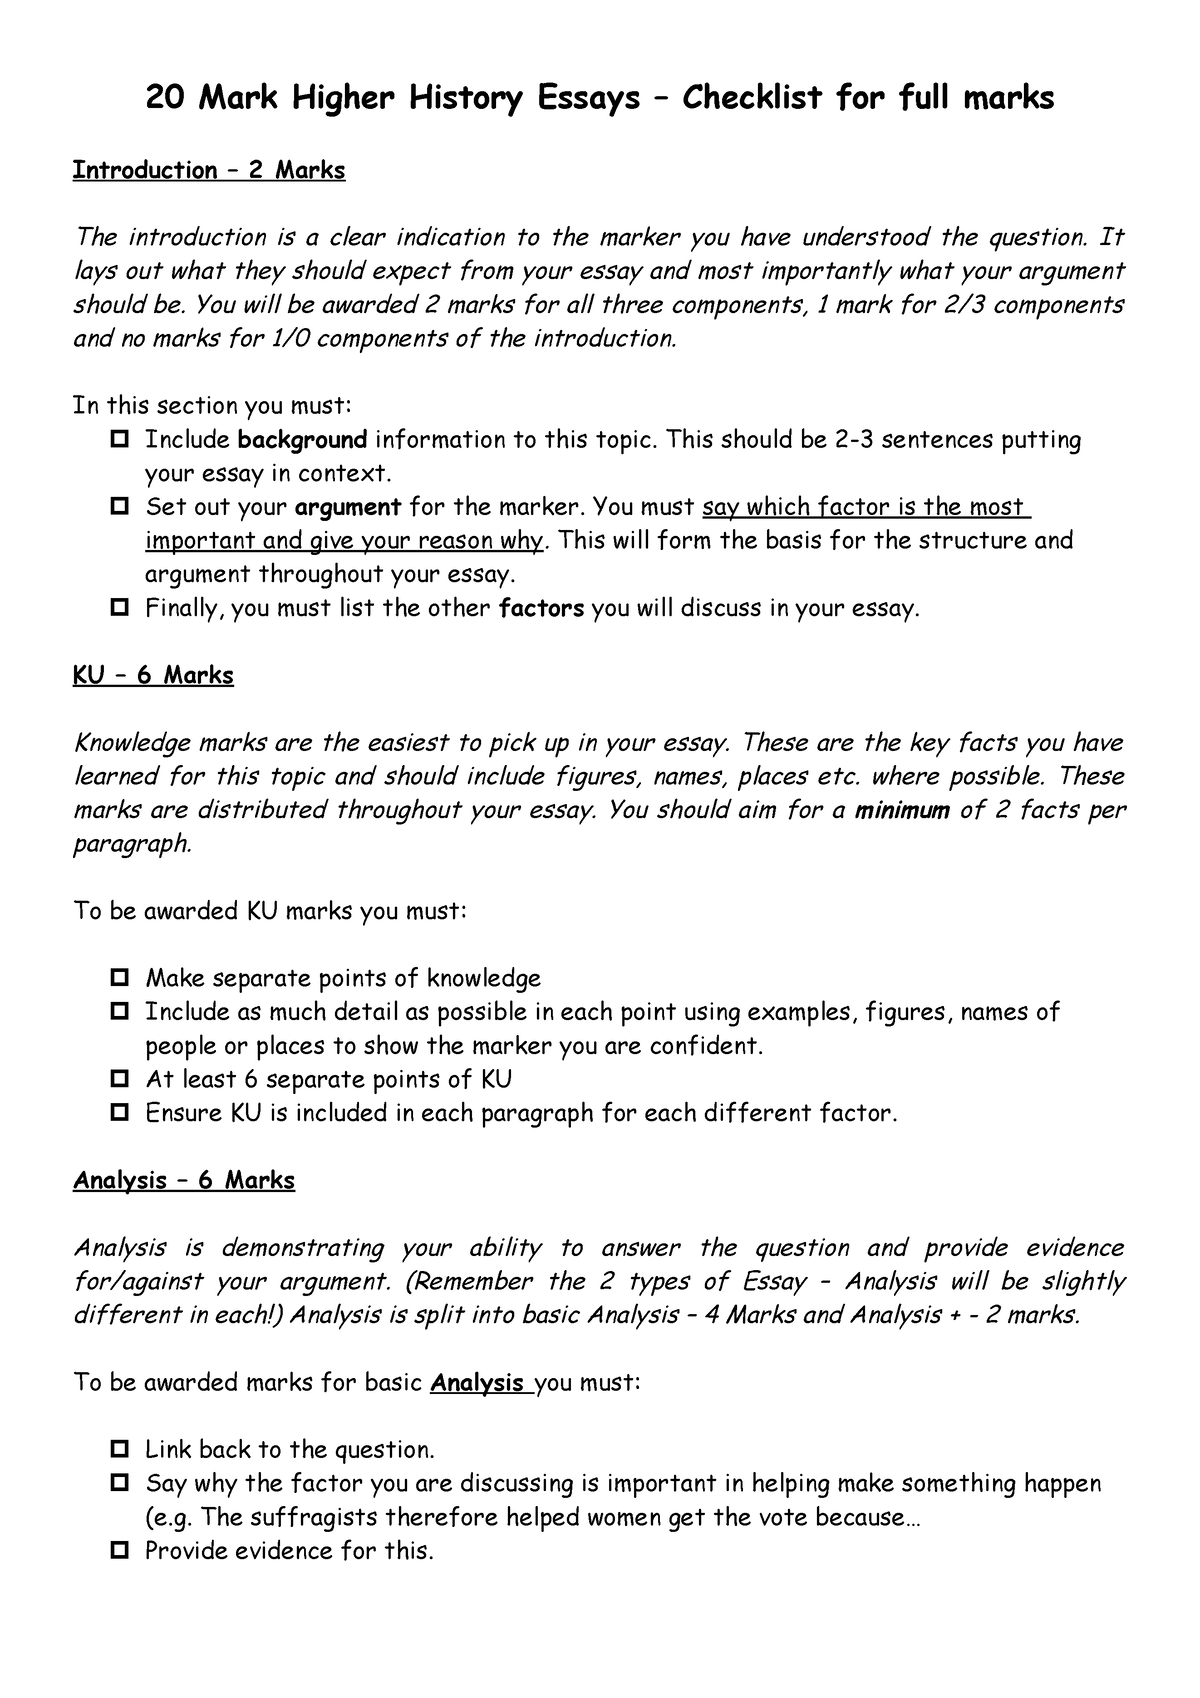 Sanskrit model question papers intermediate 1st year